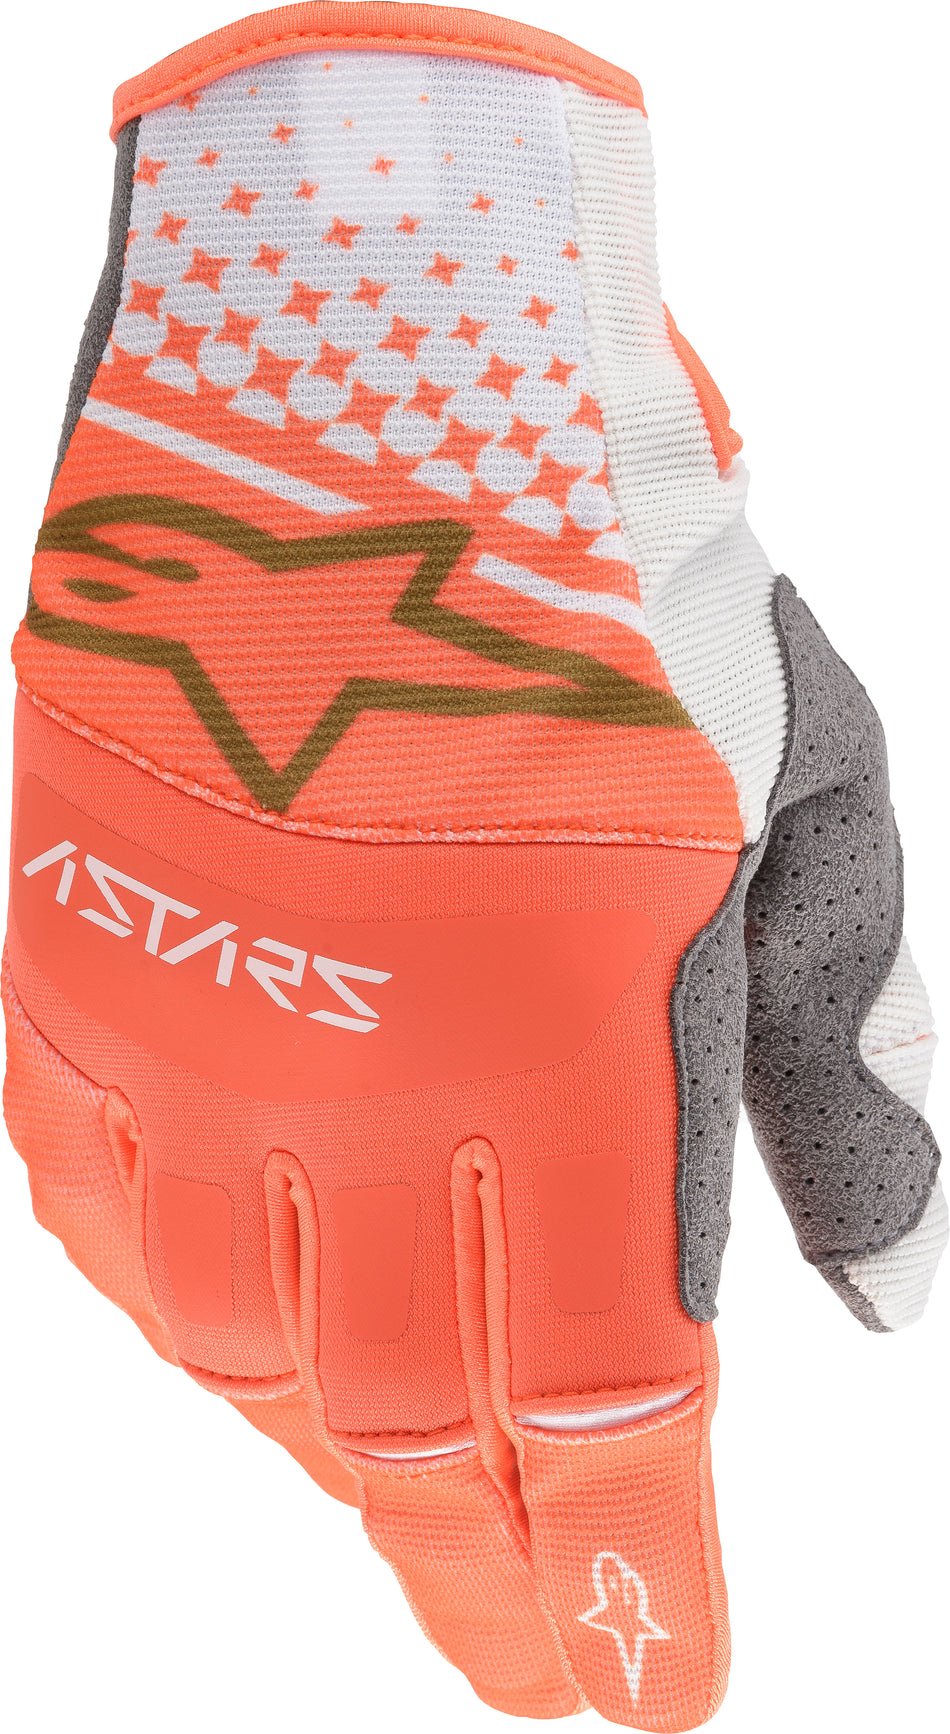 ALPINESTARS Techstar Gloves White/Orange/Gold Md 3561020-2459-M